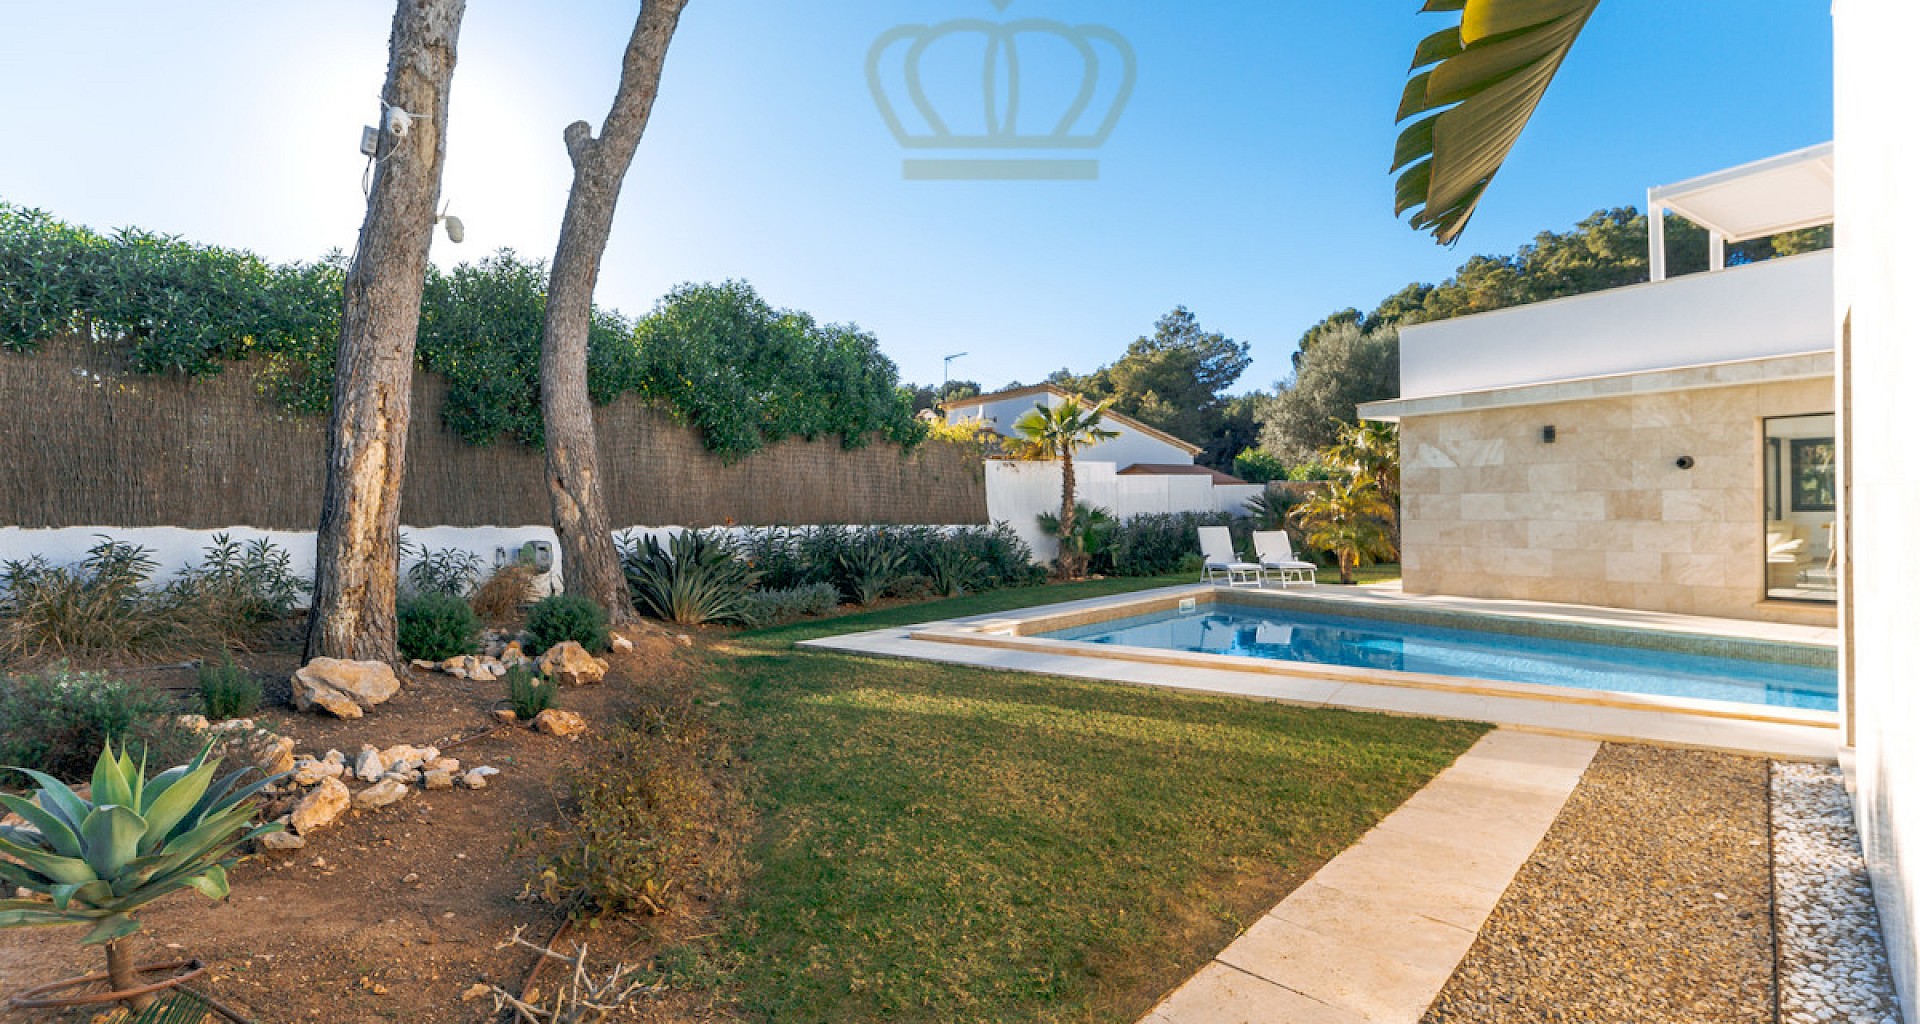 KROHN & LUEDEMANN Large modern villa in Santa Ponsa with pool for sale Grosse Villa in Santa Ponsa 10